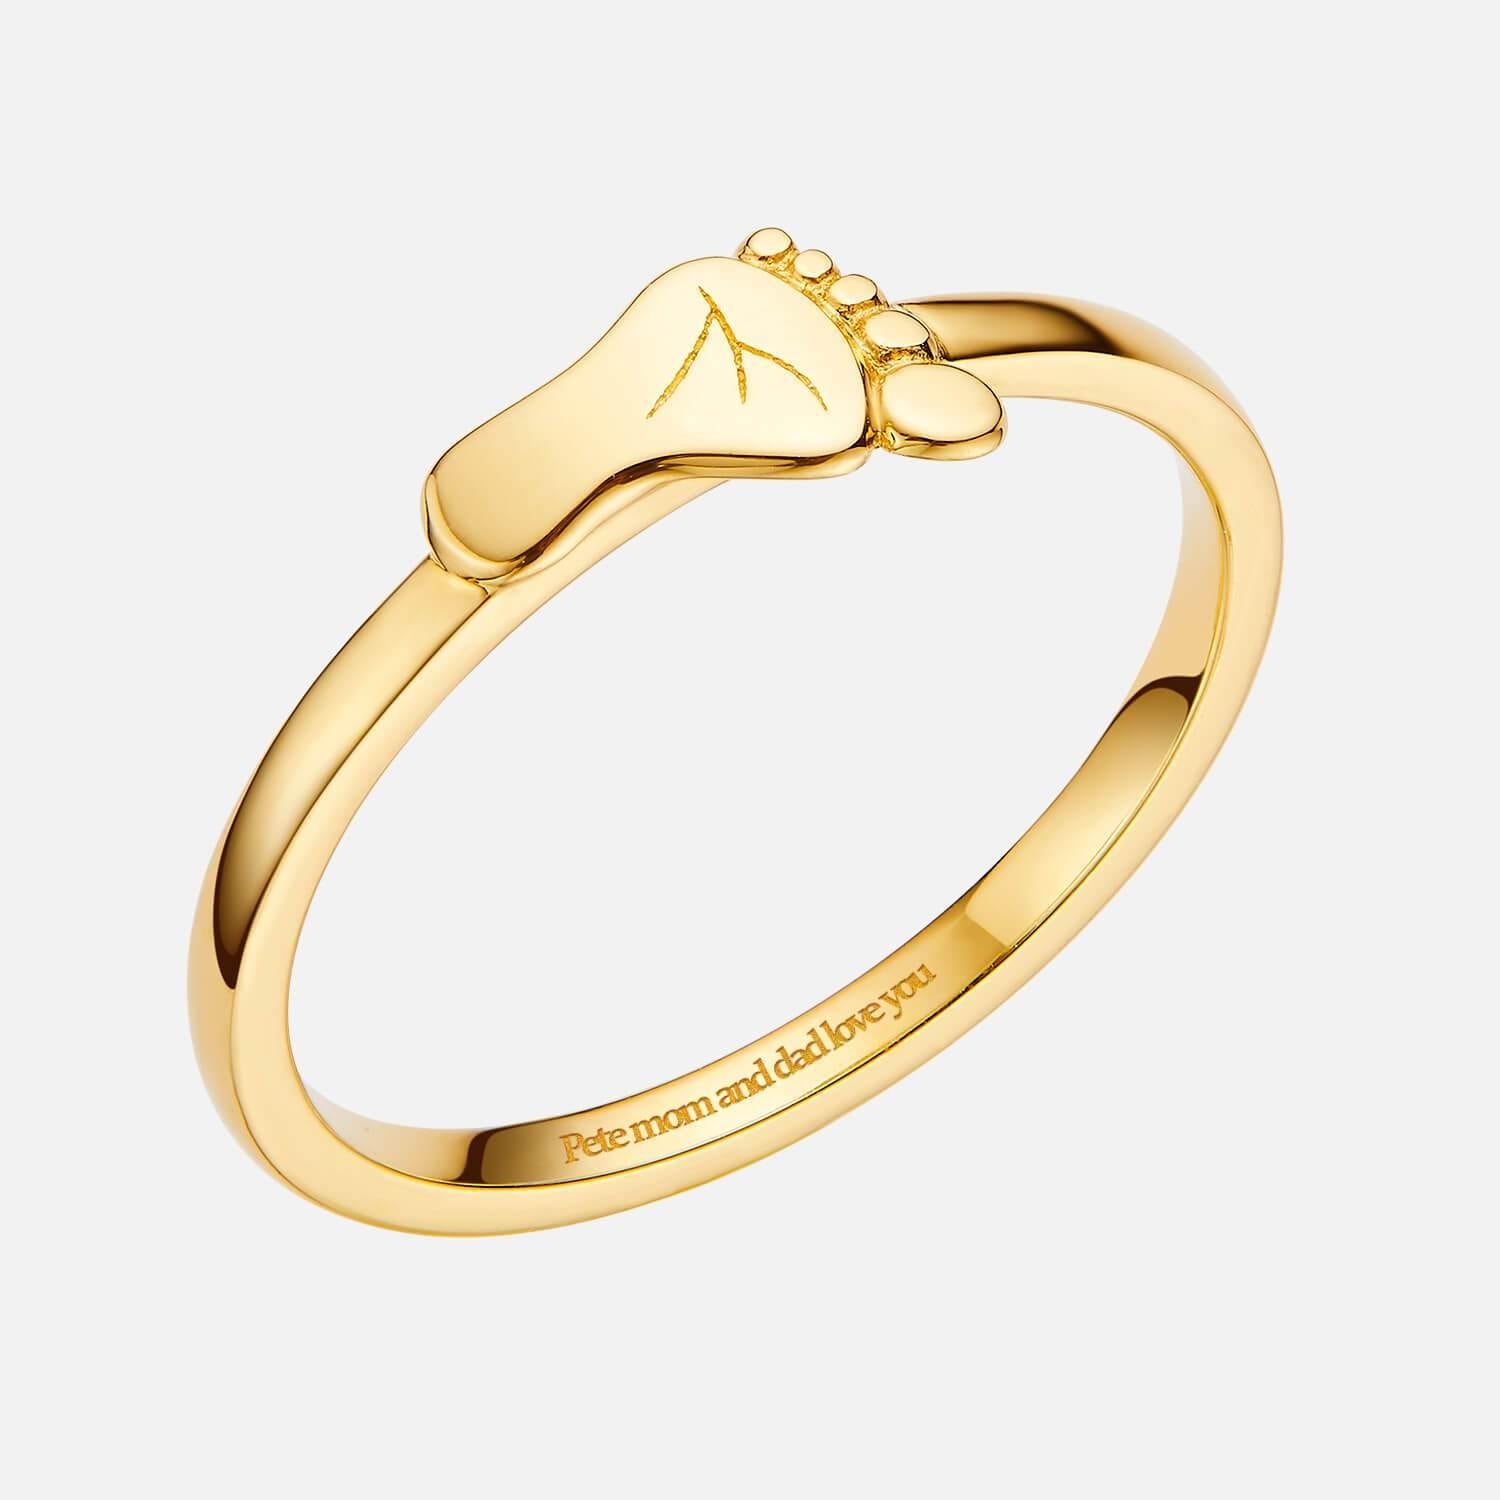 24K 999 Pure Gold Filigree Vintage Long Ring Size 7.5 - Etsy